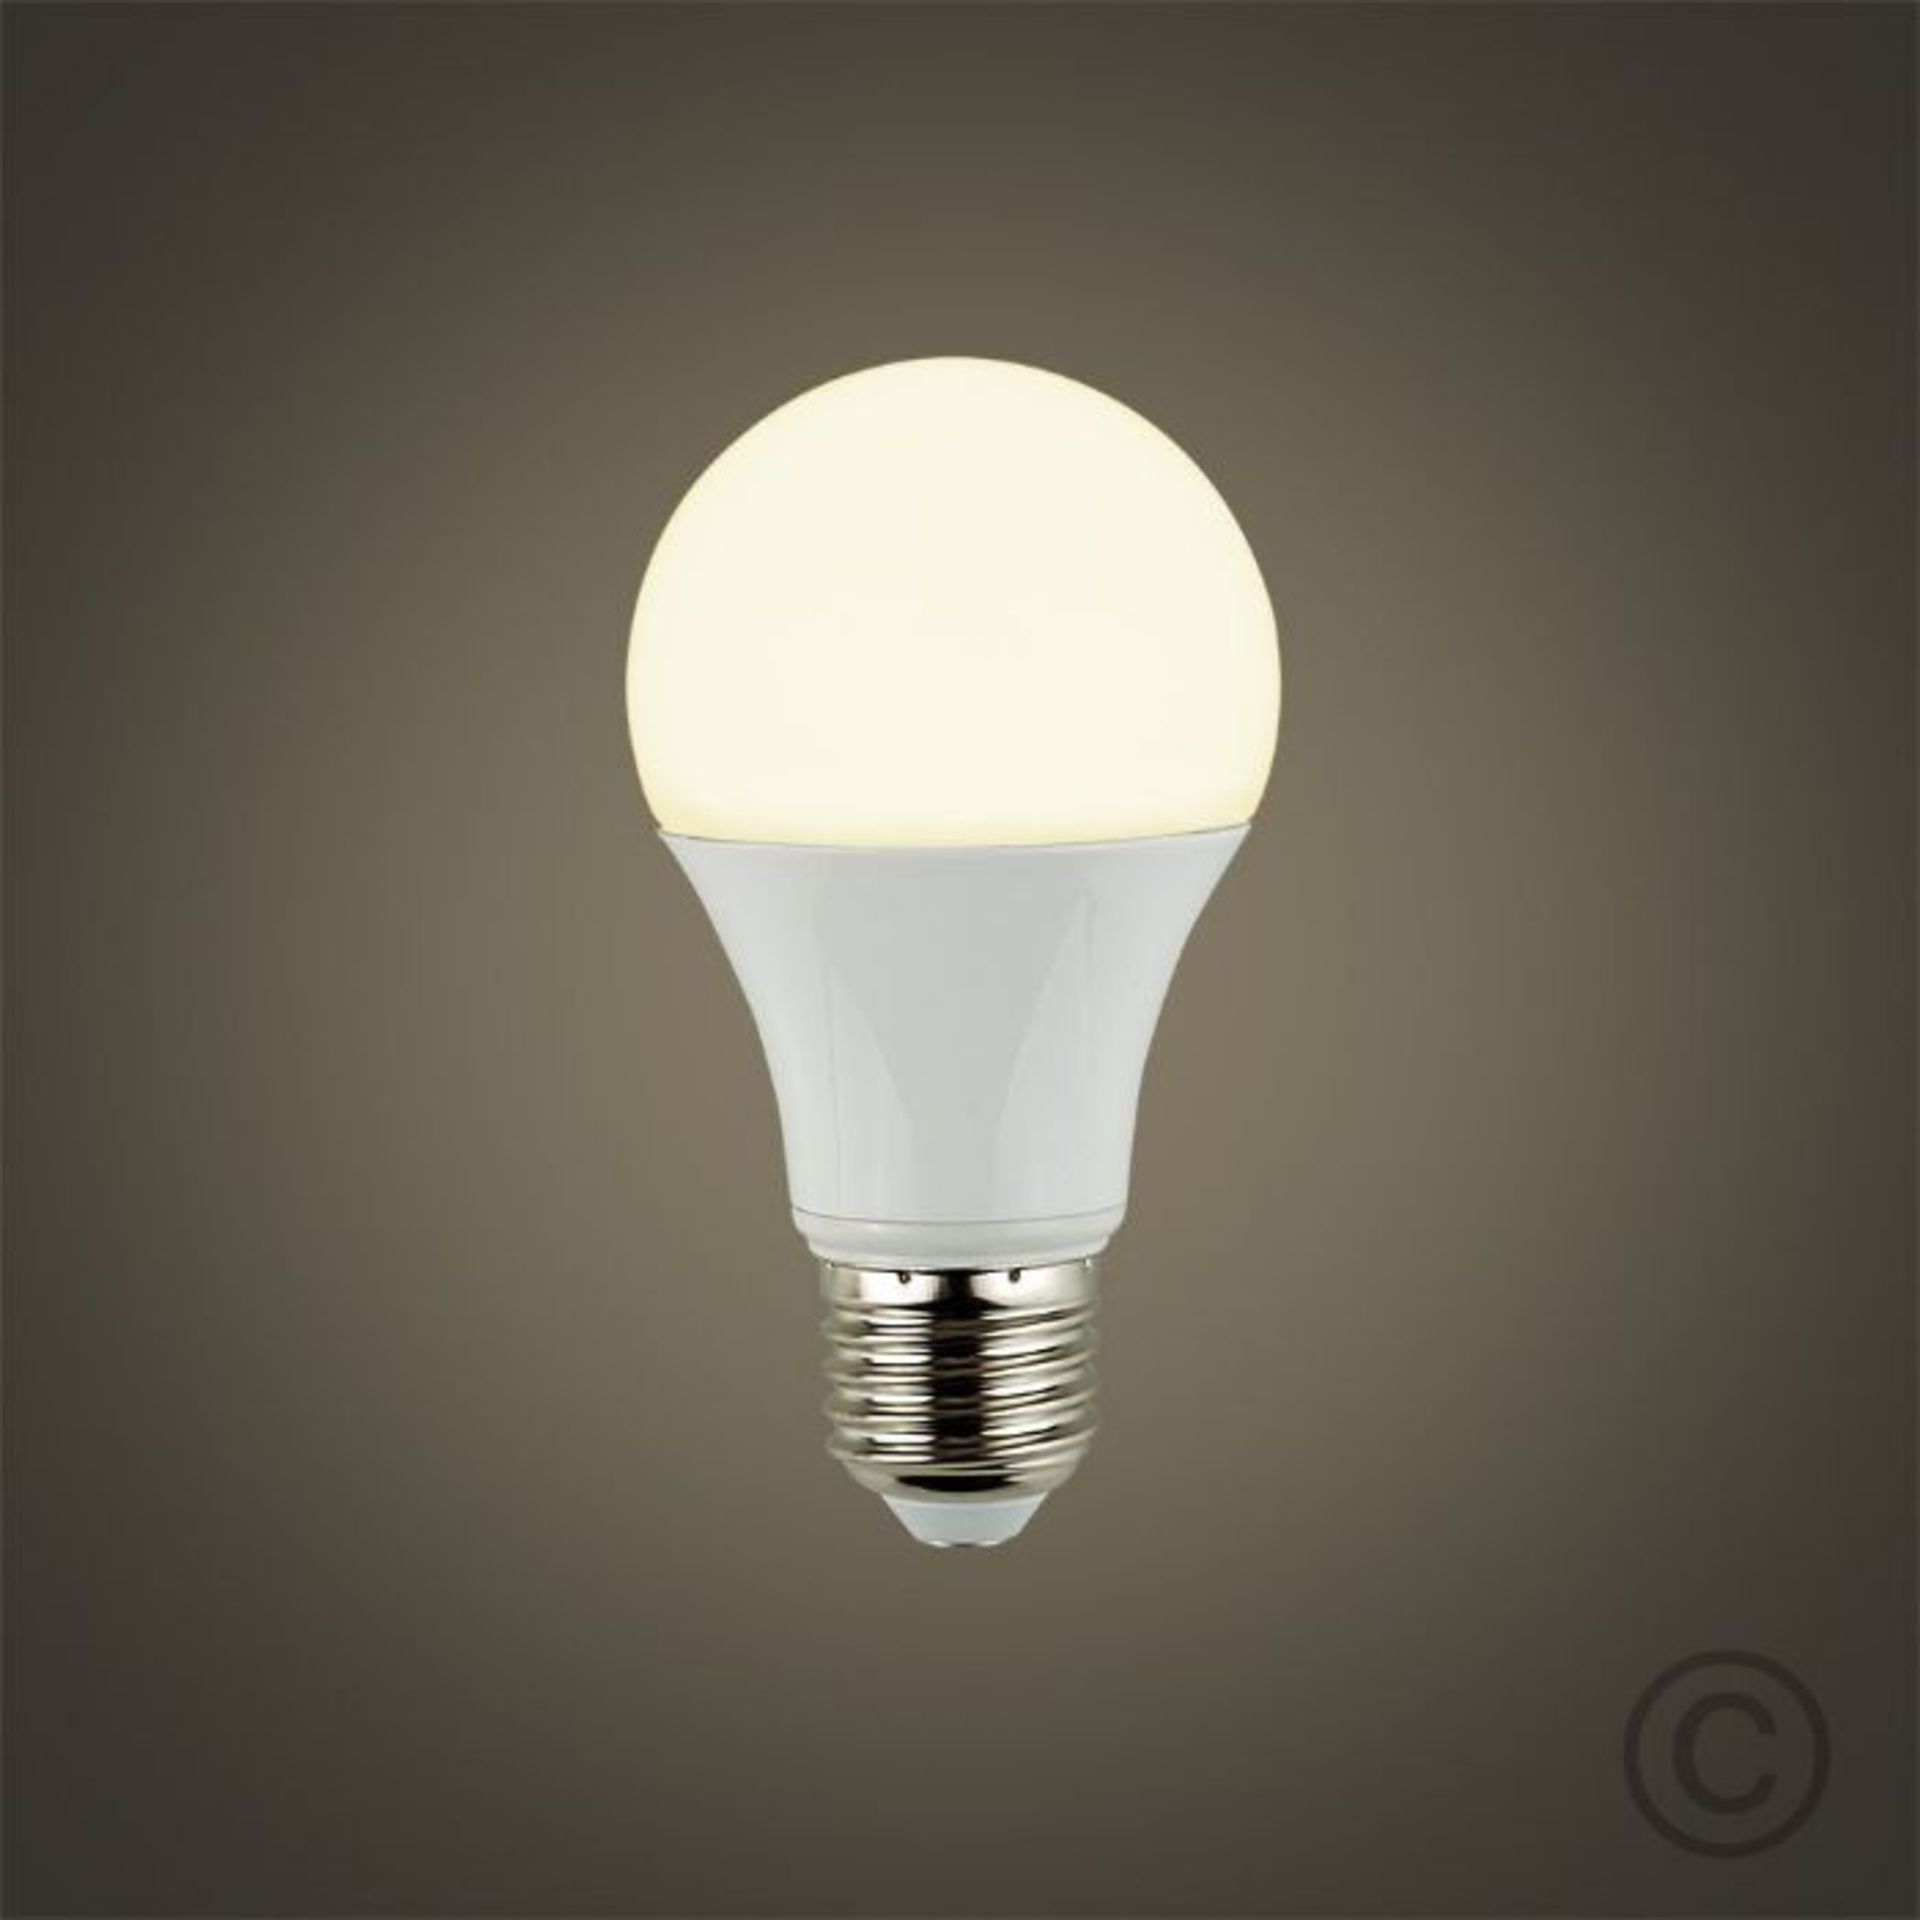 Wayfair Basics, 10W E27 LED Light Bulb - RRP £14.99 (MSUN2176 - 14290/39)